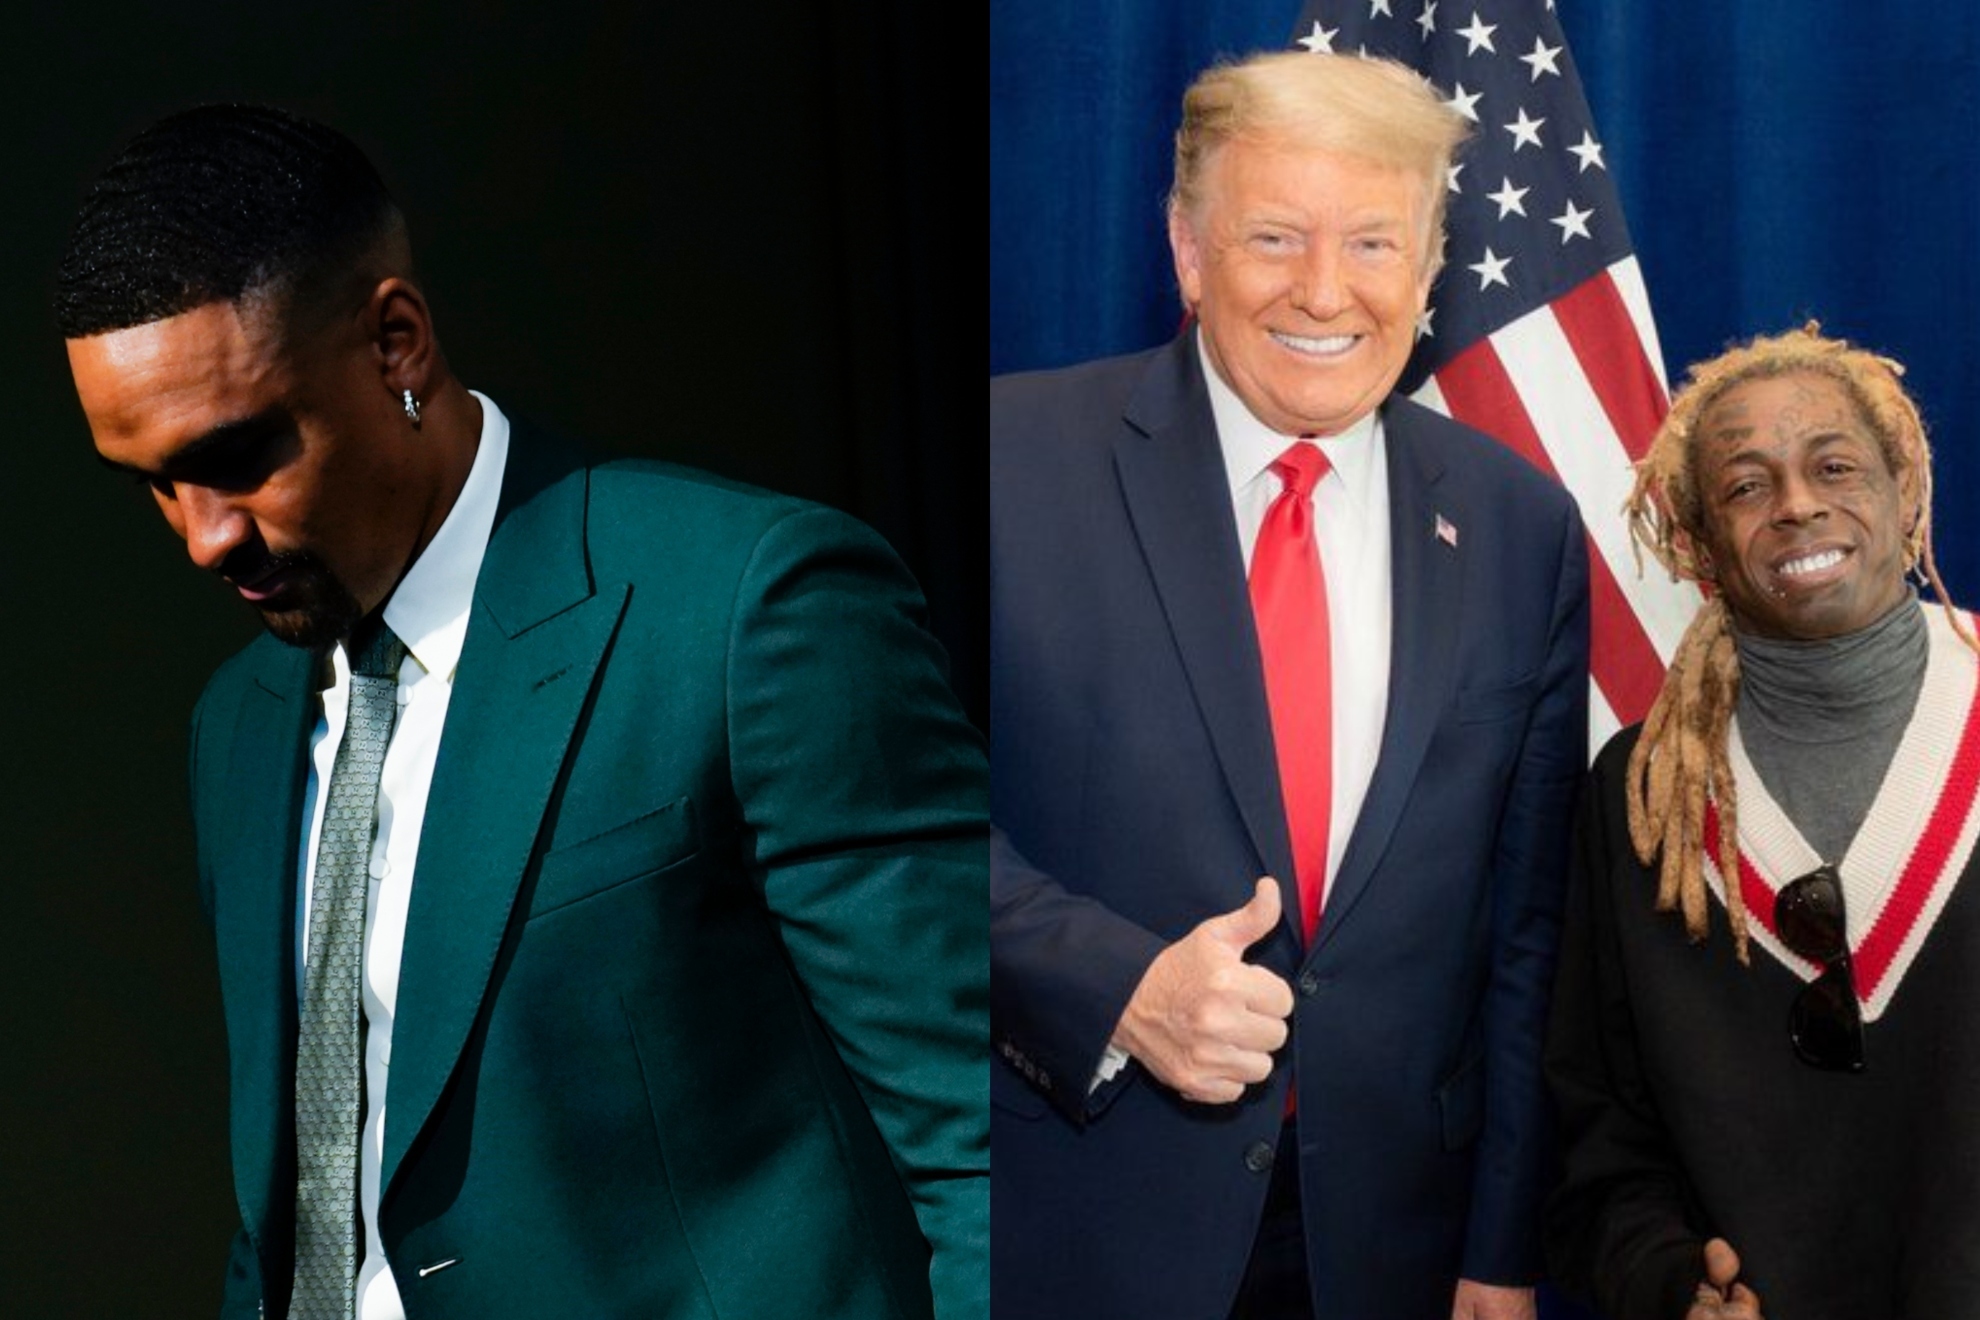 Trump photo sparks split: Jalen Hurts and agent Nicole Lynn exit Lil Wayne's sports agency